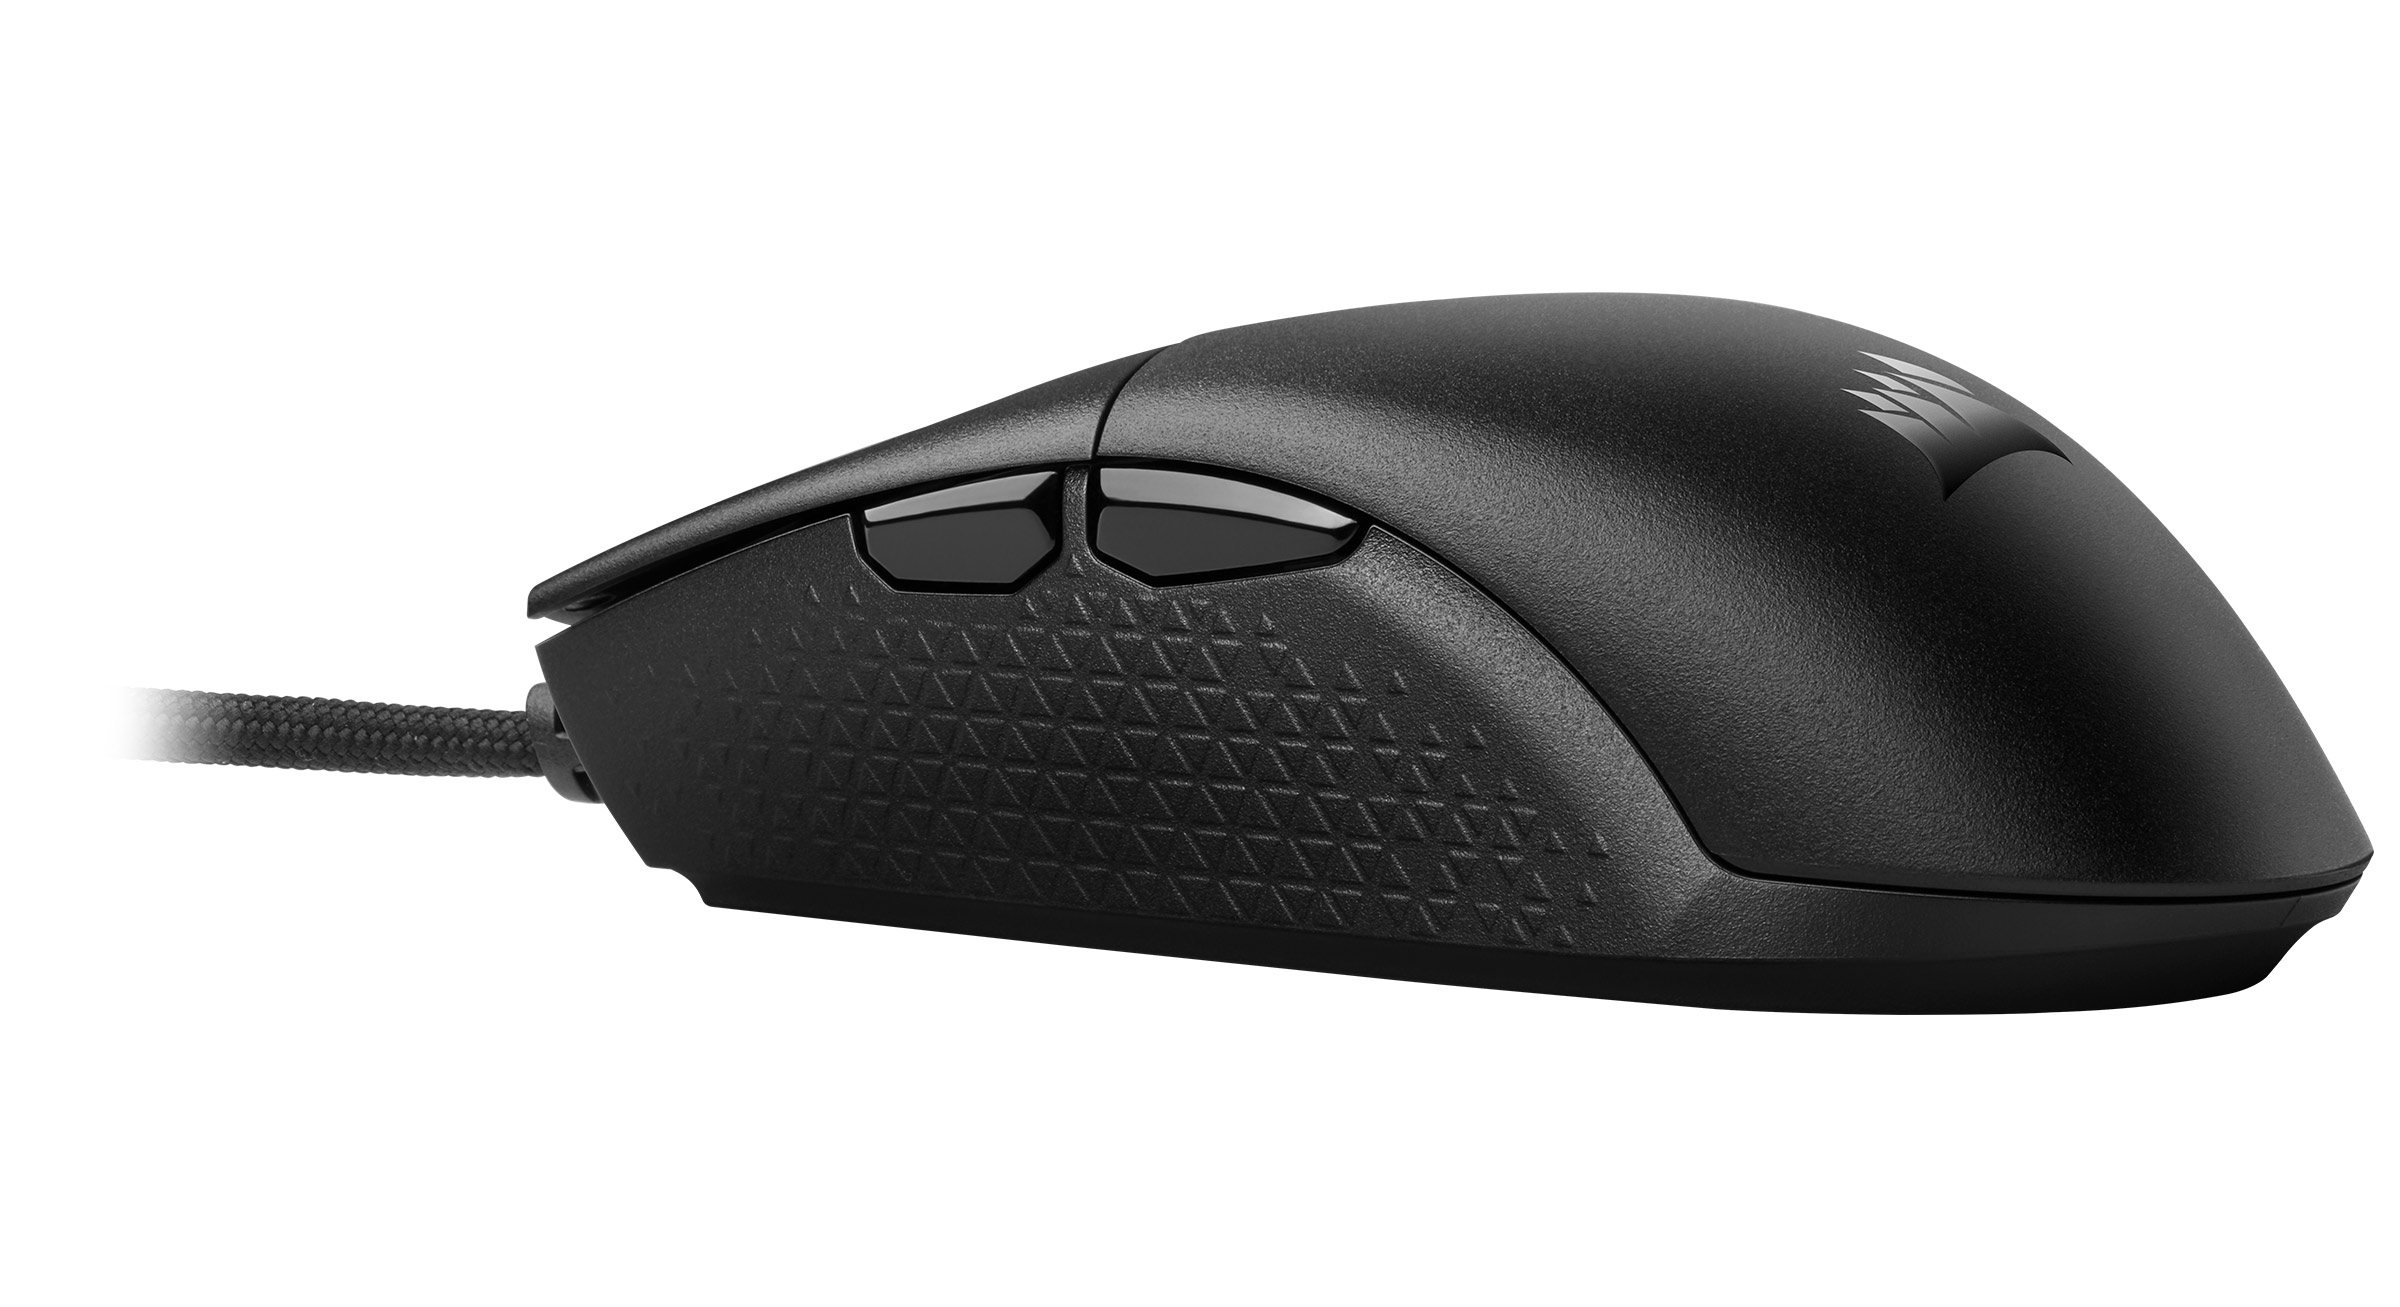  <b>Wired Gaming Mouse</b>:Corsair Katar PRO XT, Ultra Light Weight, Wheel RGB, ICUE, Quik Strike Buttons, 18K DPI Optical sensor  